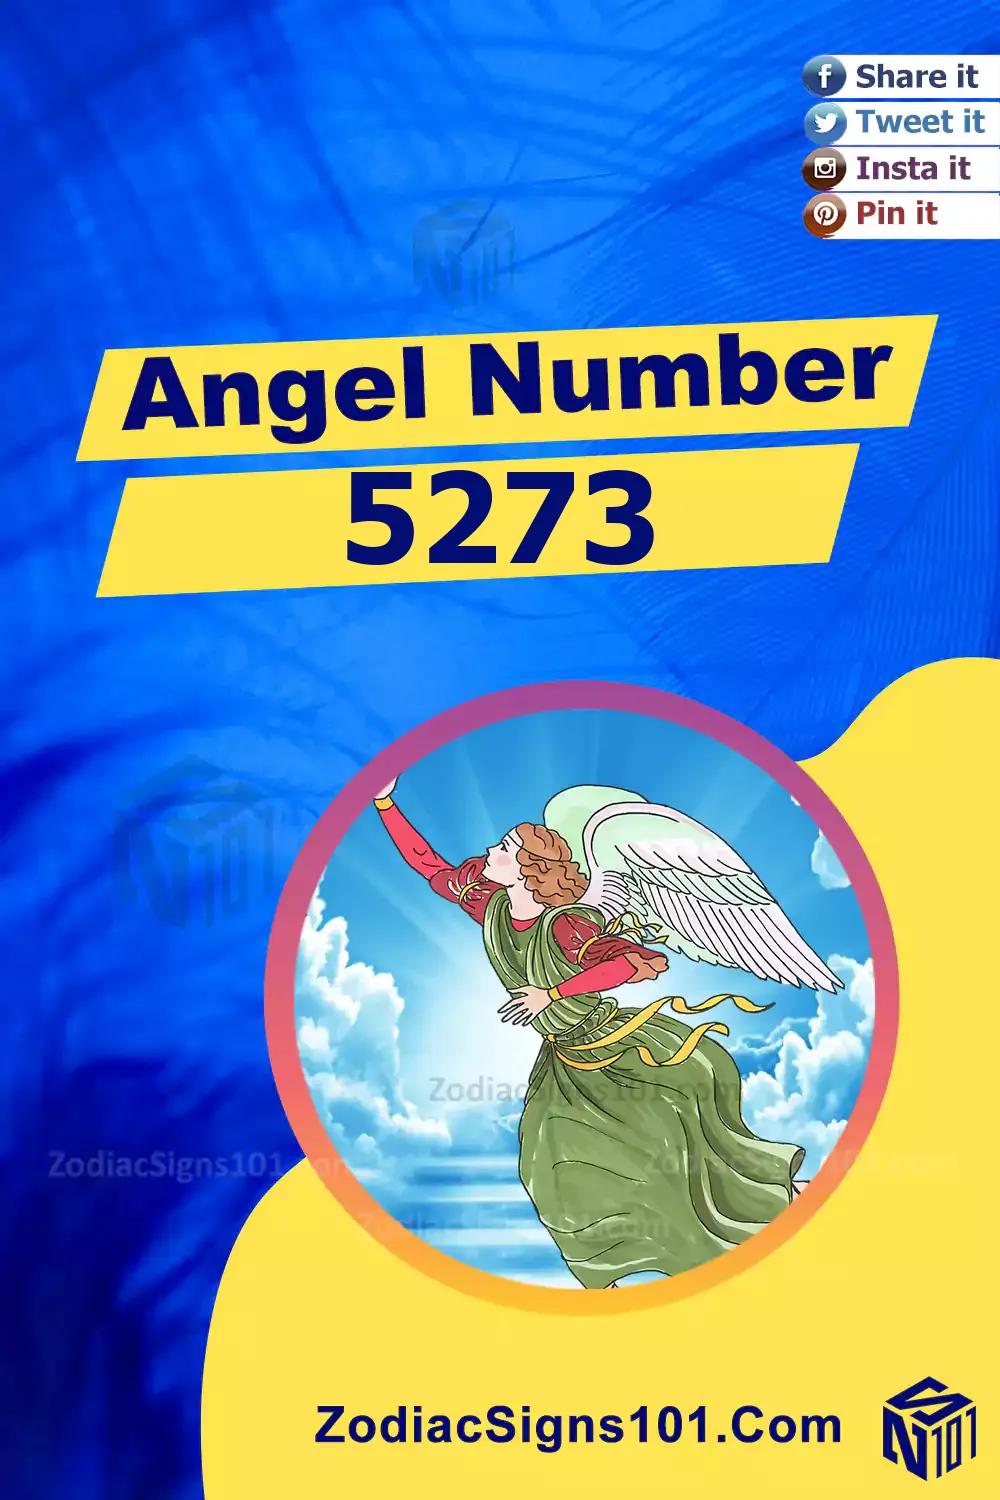 5273-Angel-Number-Meaning.jpg